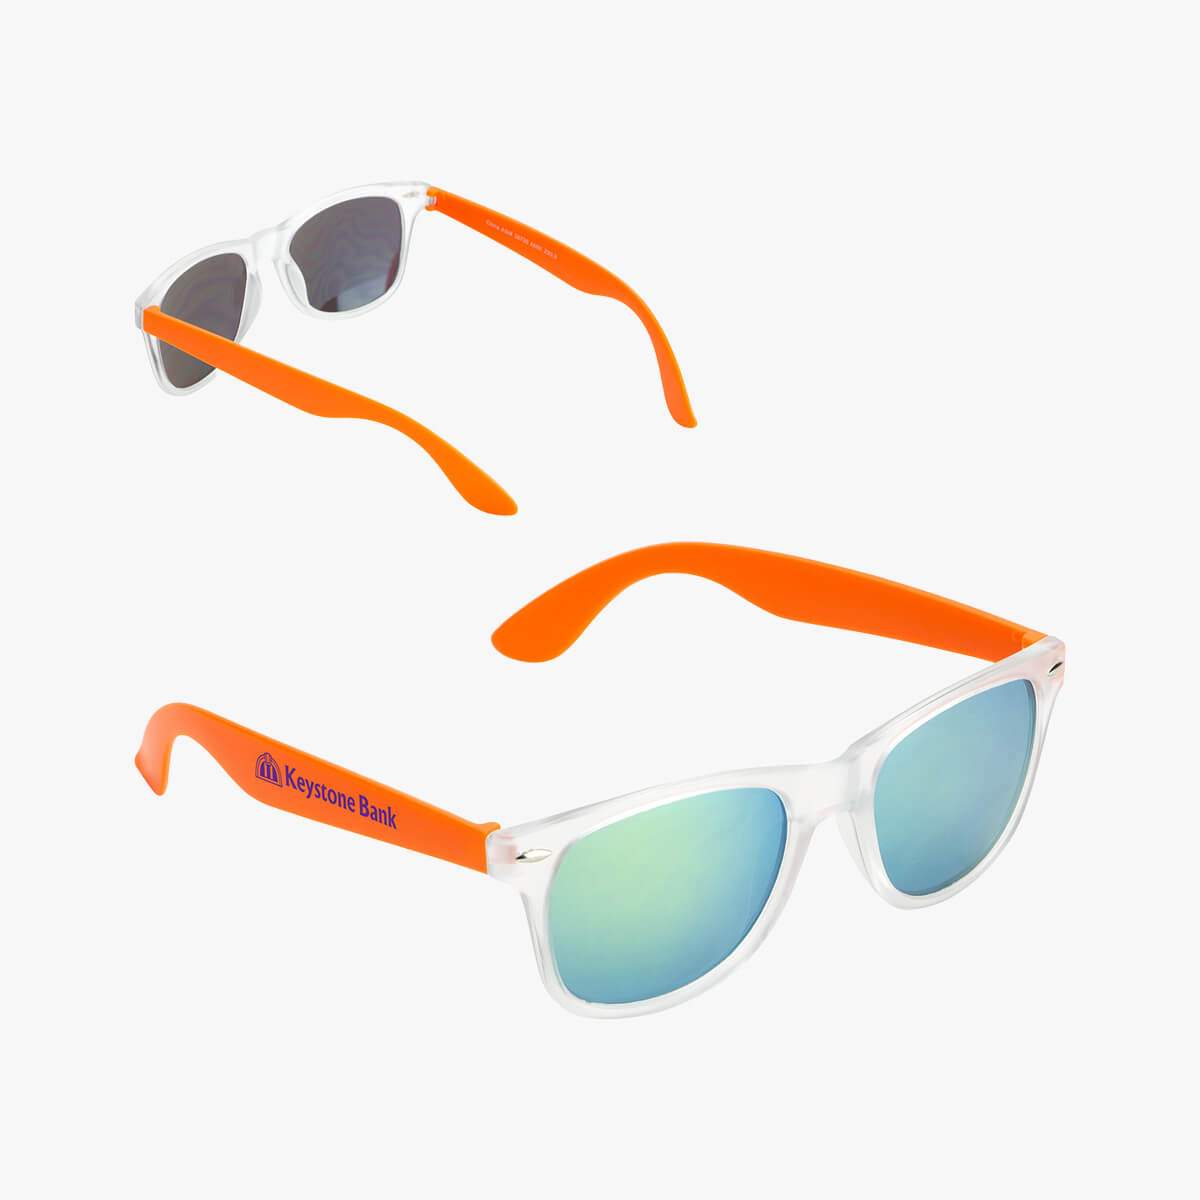 Key West Mirrored Sunglasses